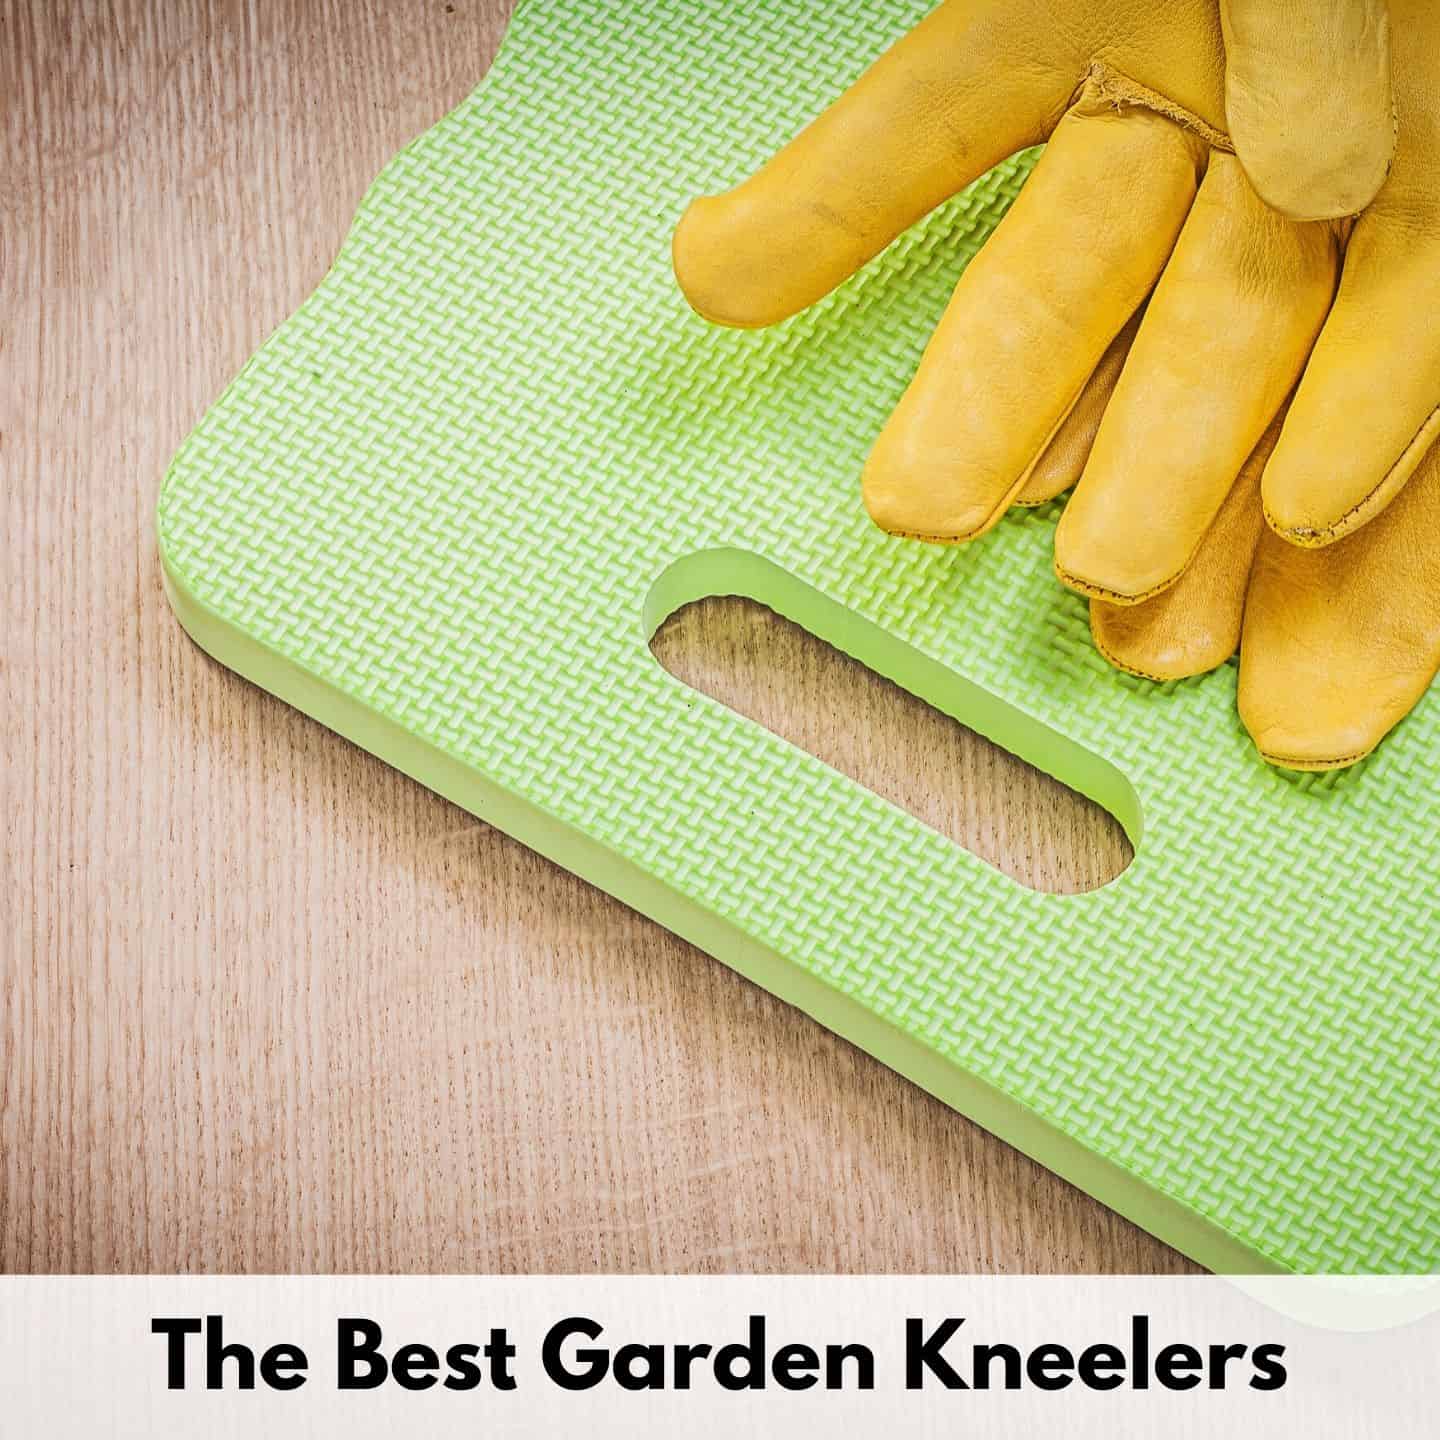 Green Blade Kneeling Pad Floor Scrubbing Household Jobs Ideal For Gardening 